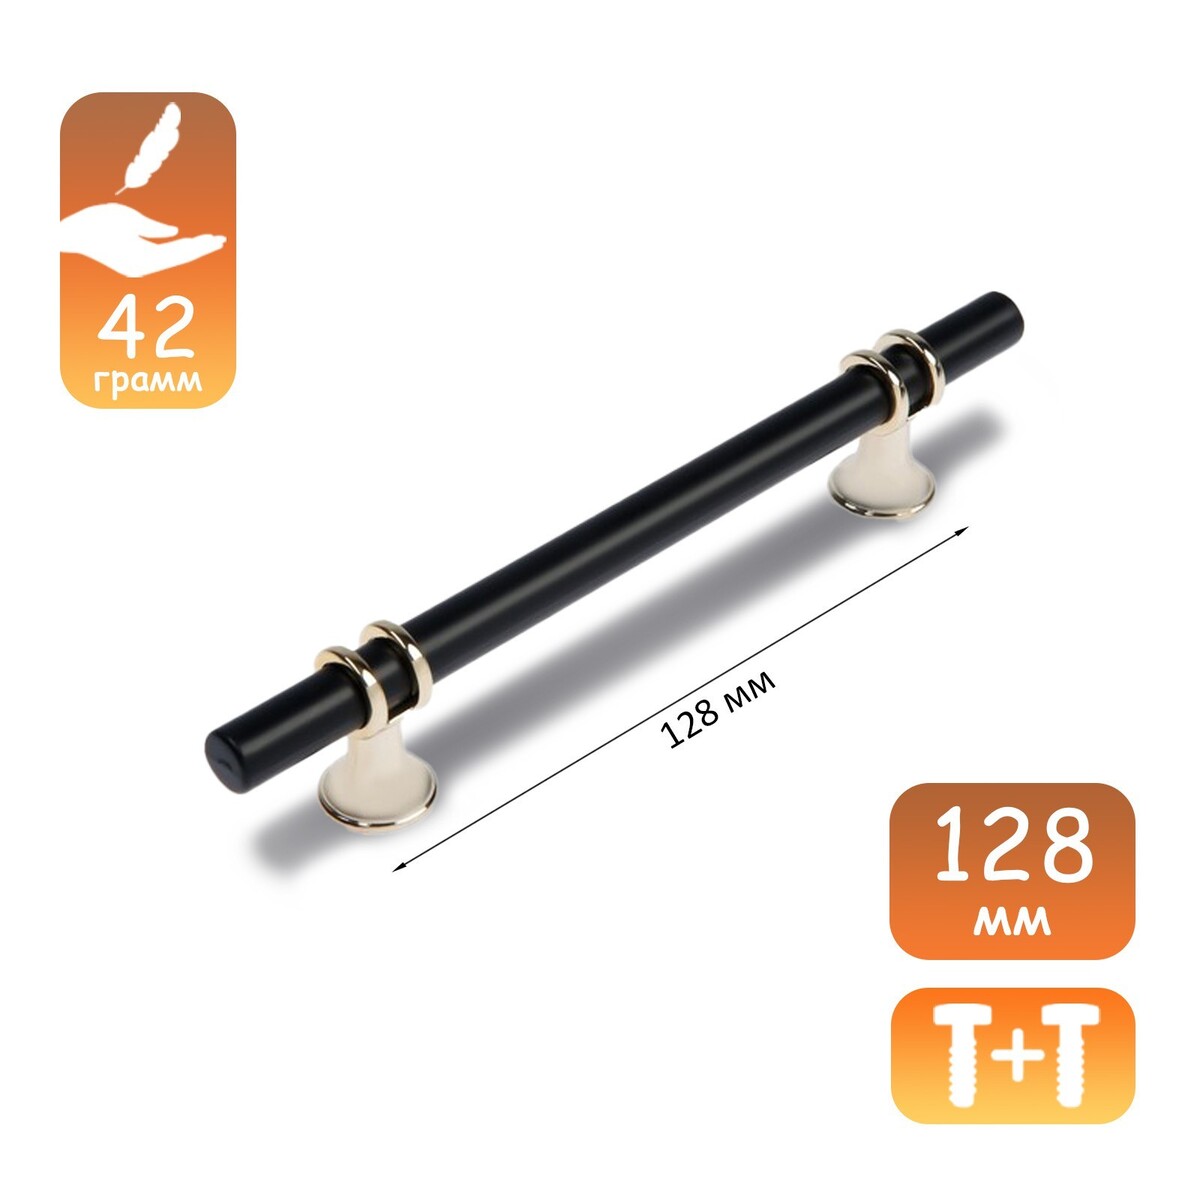 Ручка скоба cappio, м/о 128 мм, d=12 mm, пластик, цвет золото/черный ручка скоба wave pc173bl м о 128 мм